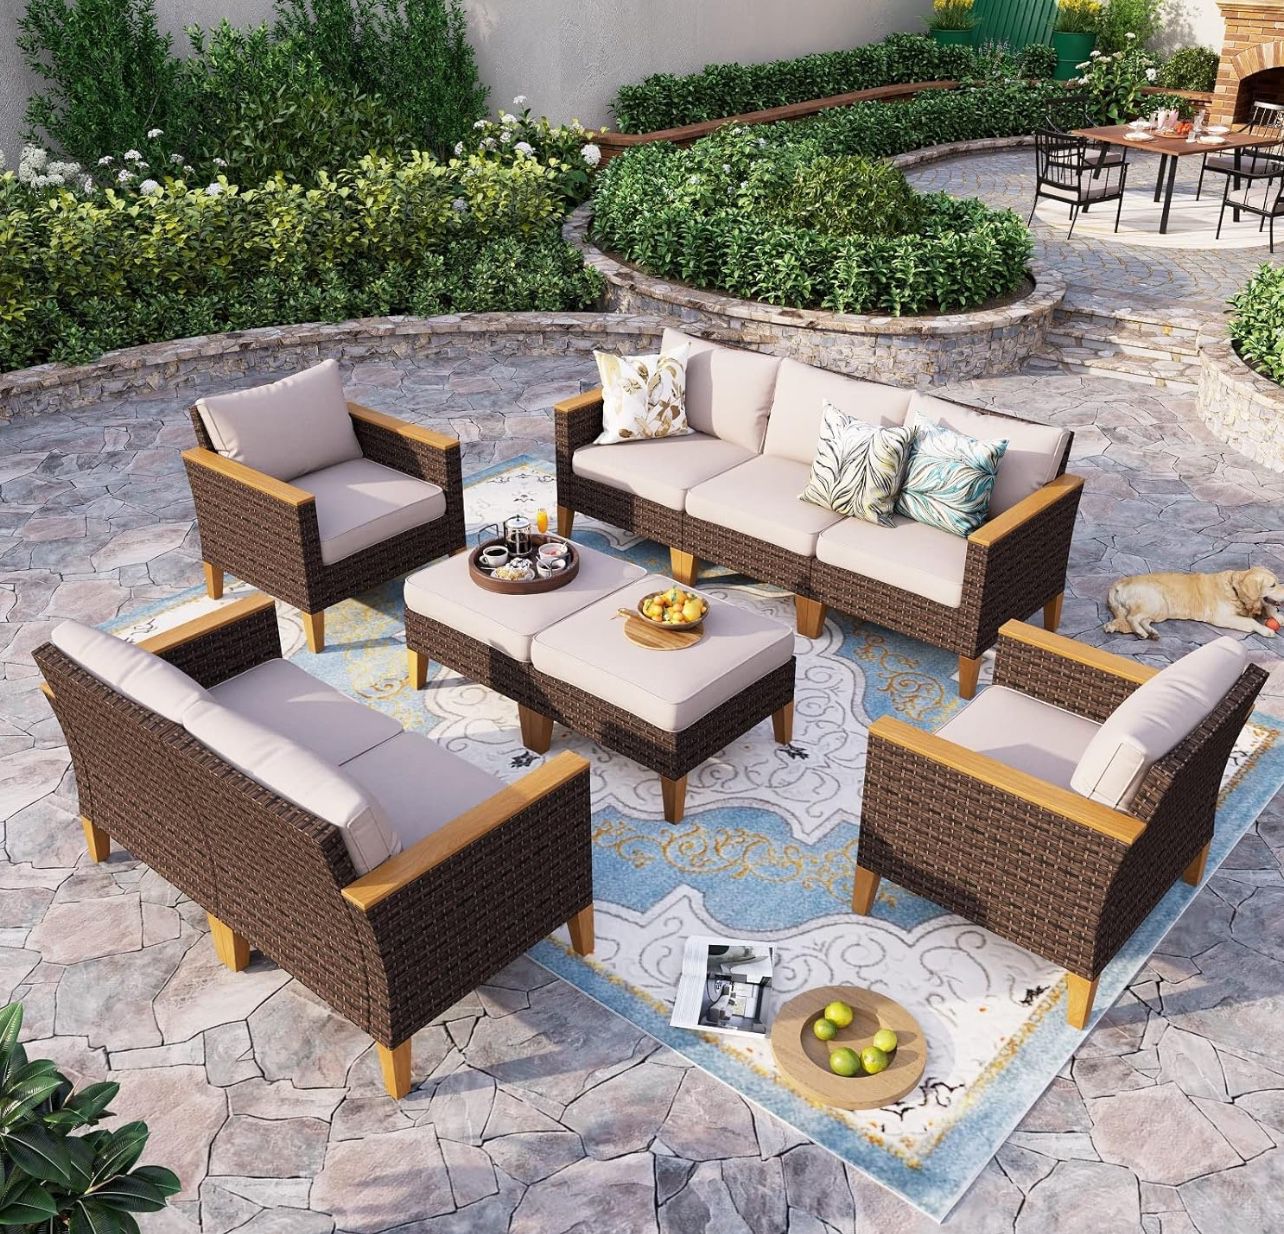 NEW Wicker Patio Furniture Set, Outdoor Rattan Sectional Sofa 9 Piece Patio Conversation Set 